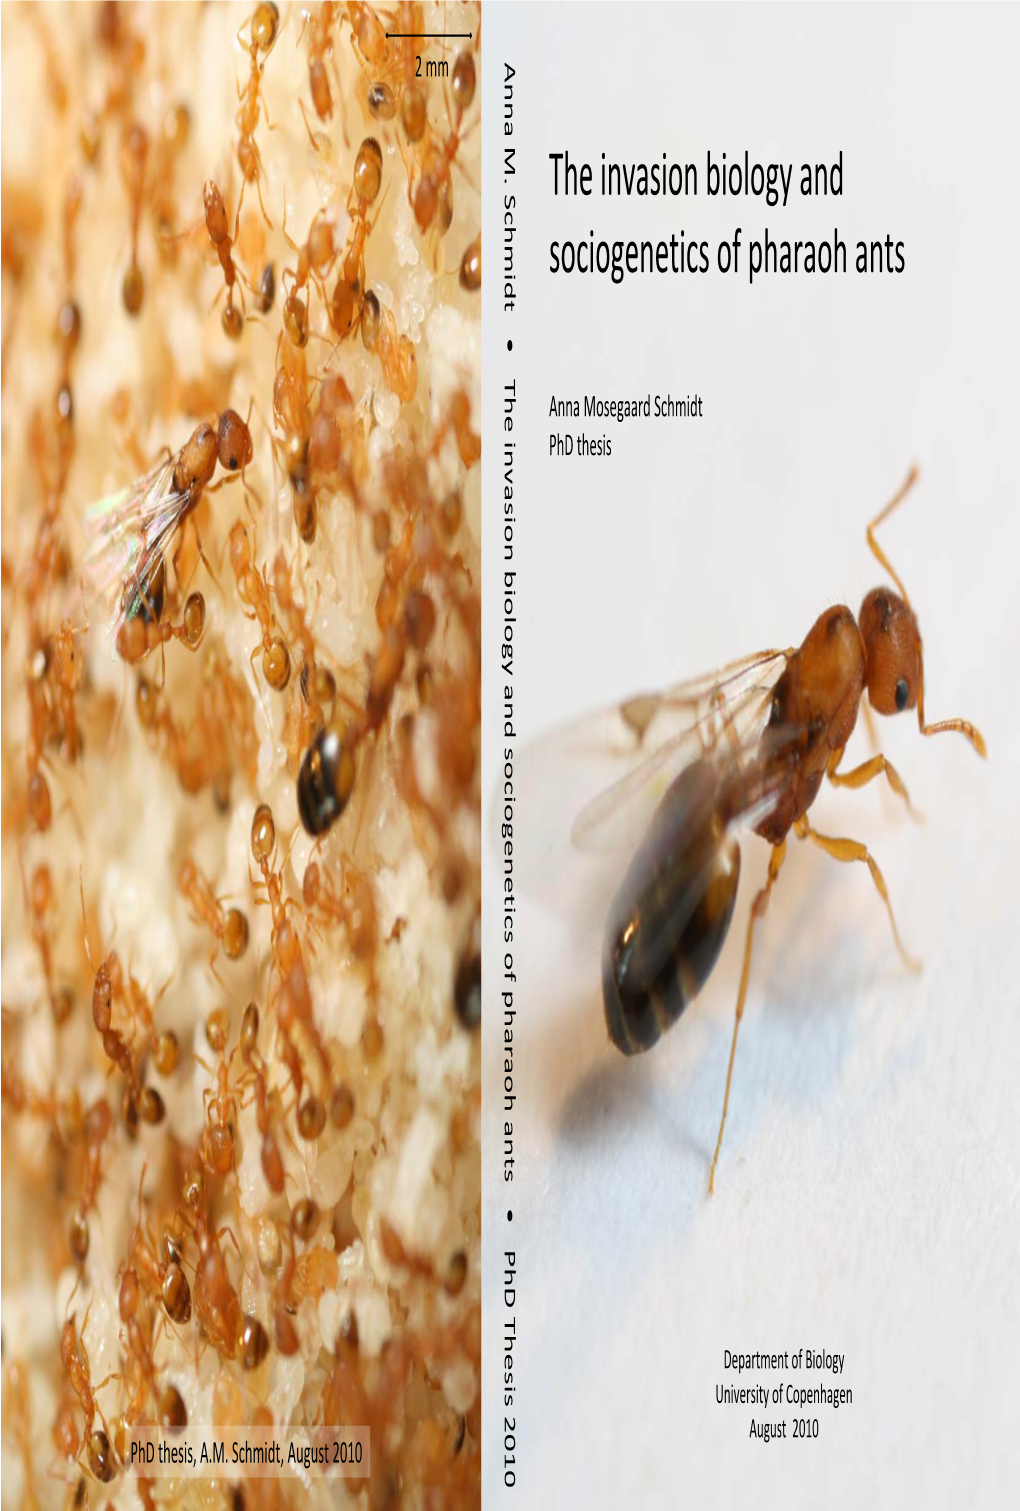 The Invasion Biology and Sociogenetics of Pharaoh Ants